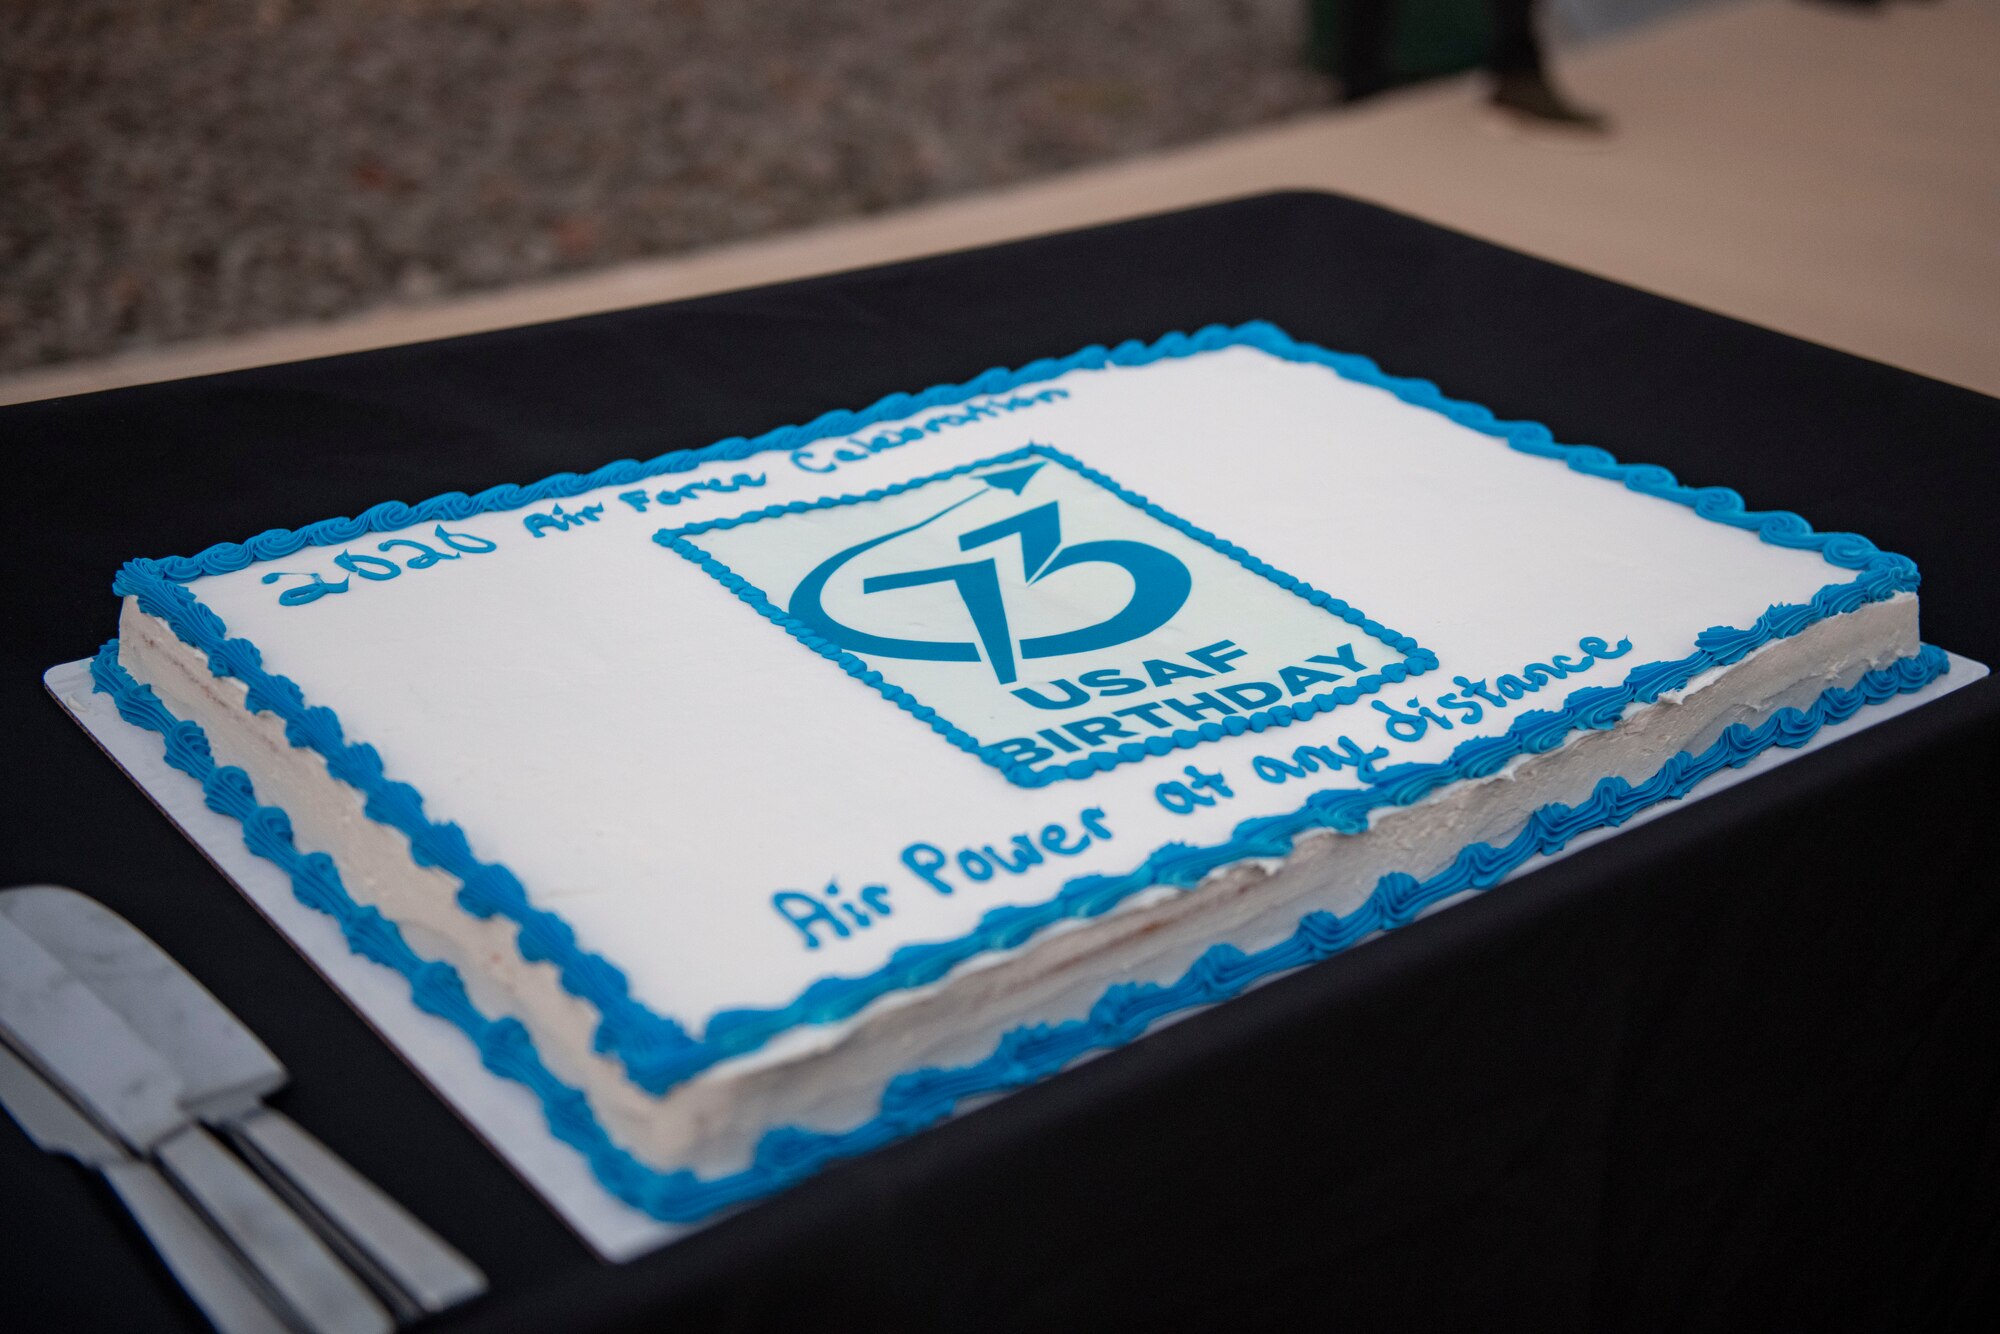 2020 Air Force Birthday Celebration.